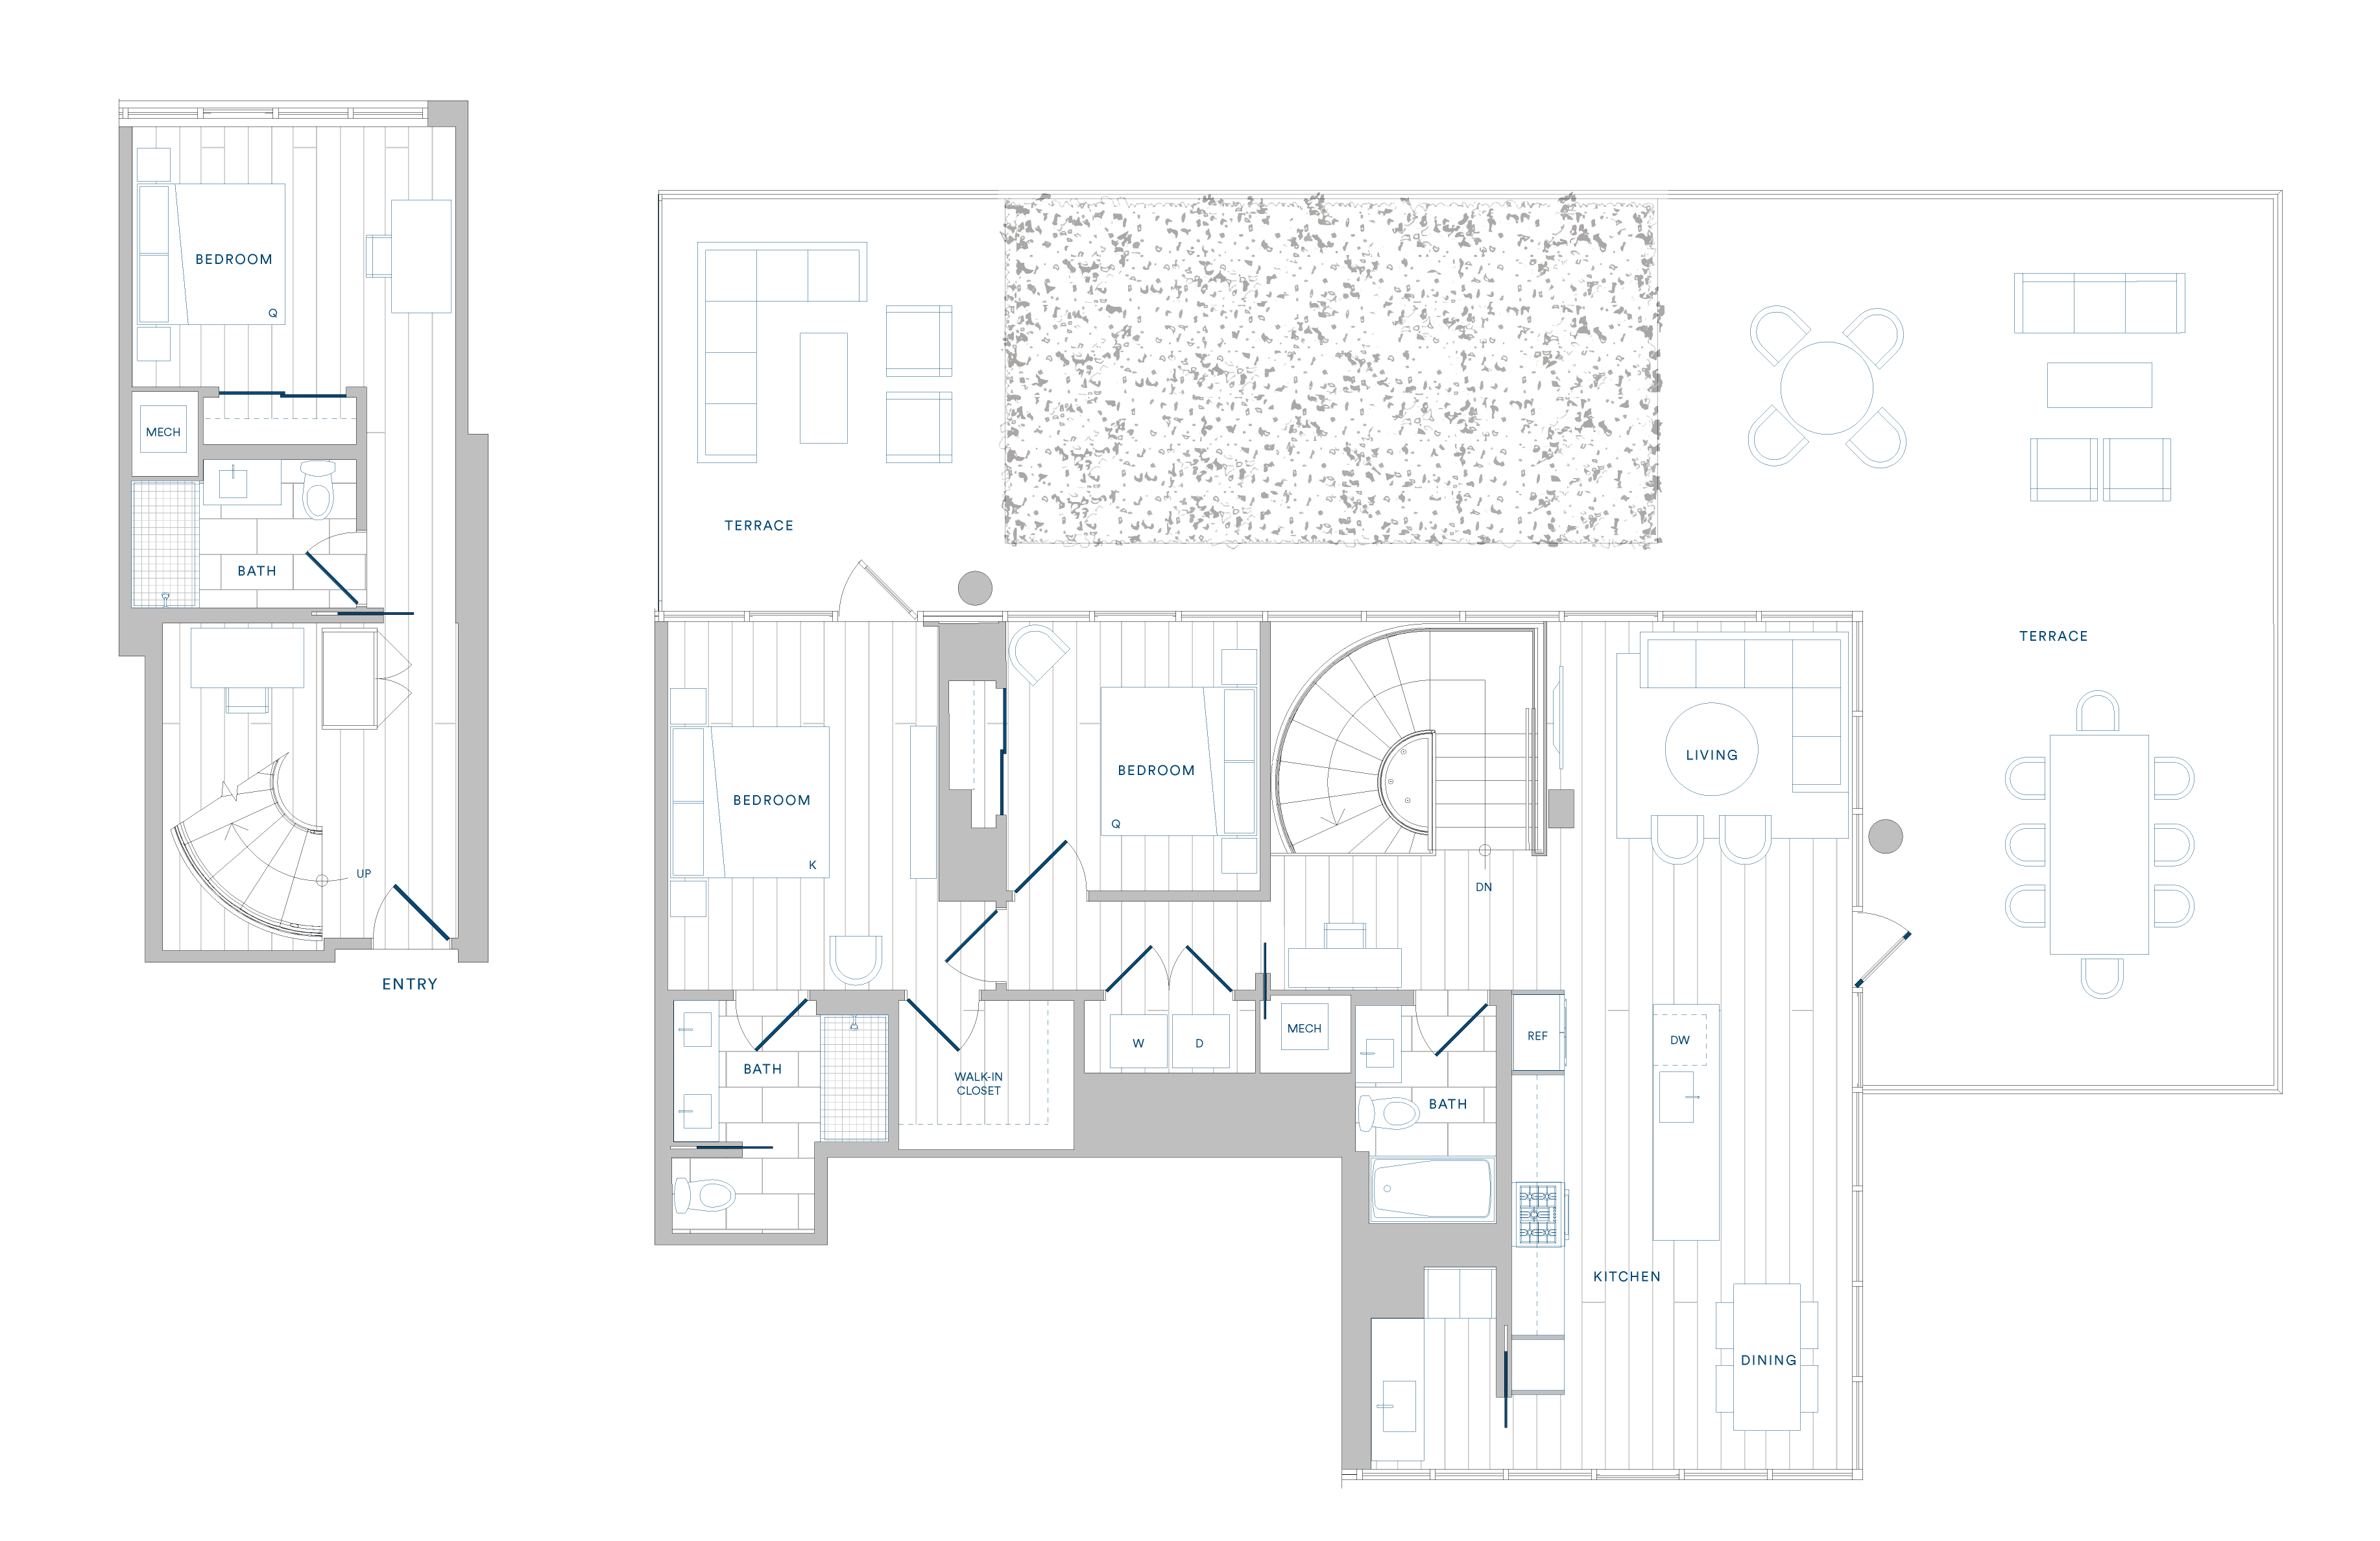 Floorplan for Apartment #1311, 3 bedroom unit at Margarite